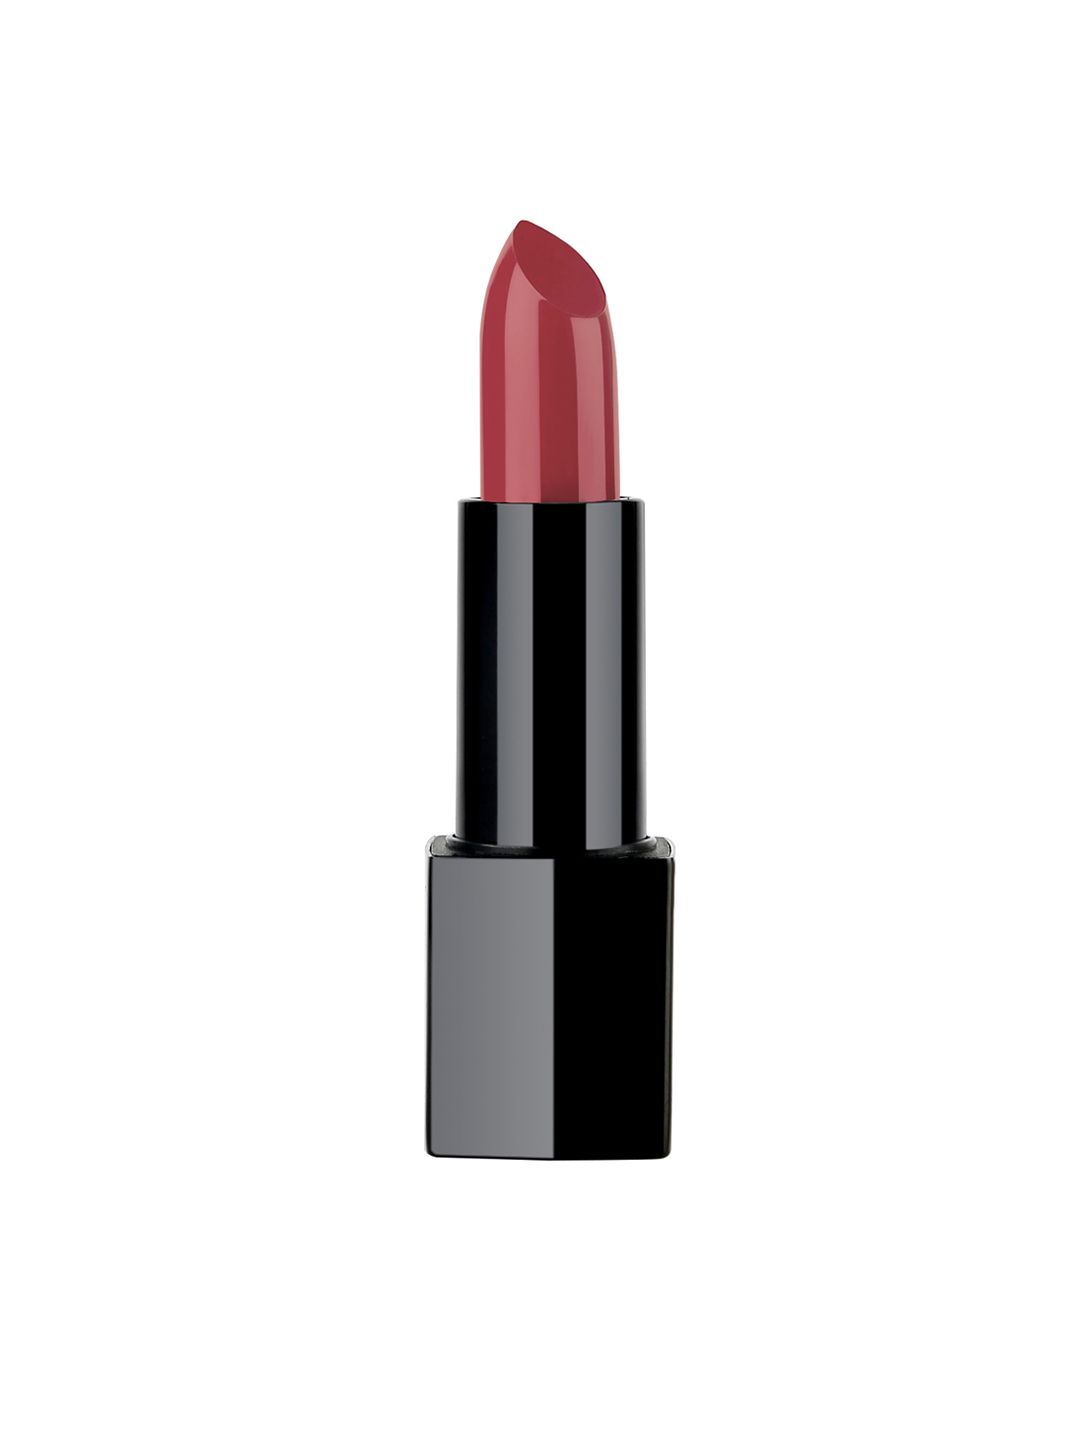 PAC Lip Dip Lipstick- Trouble Maker 01 Price in India